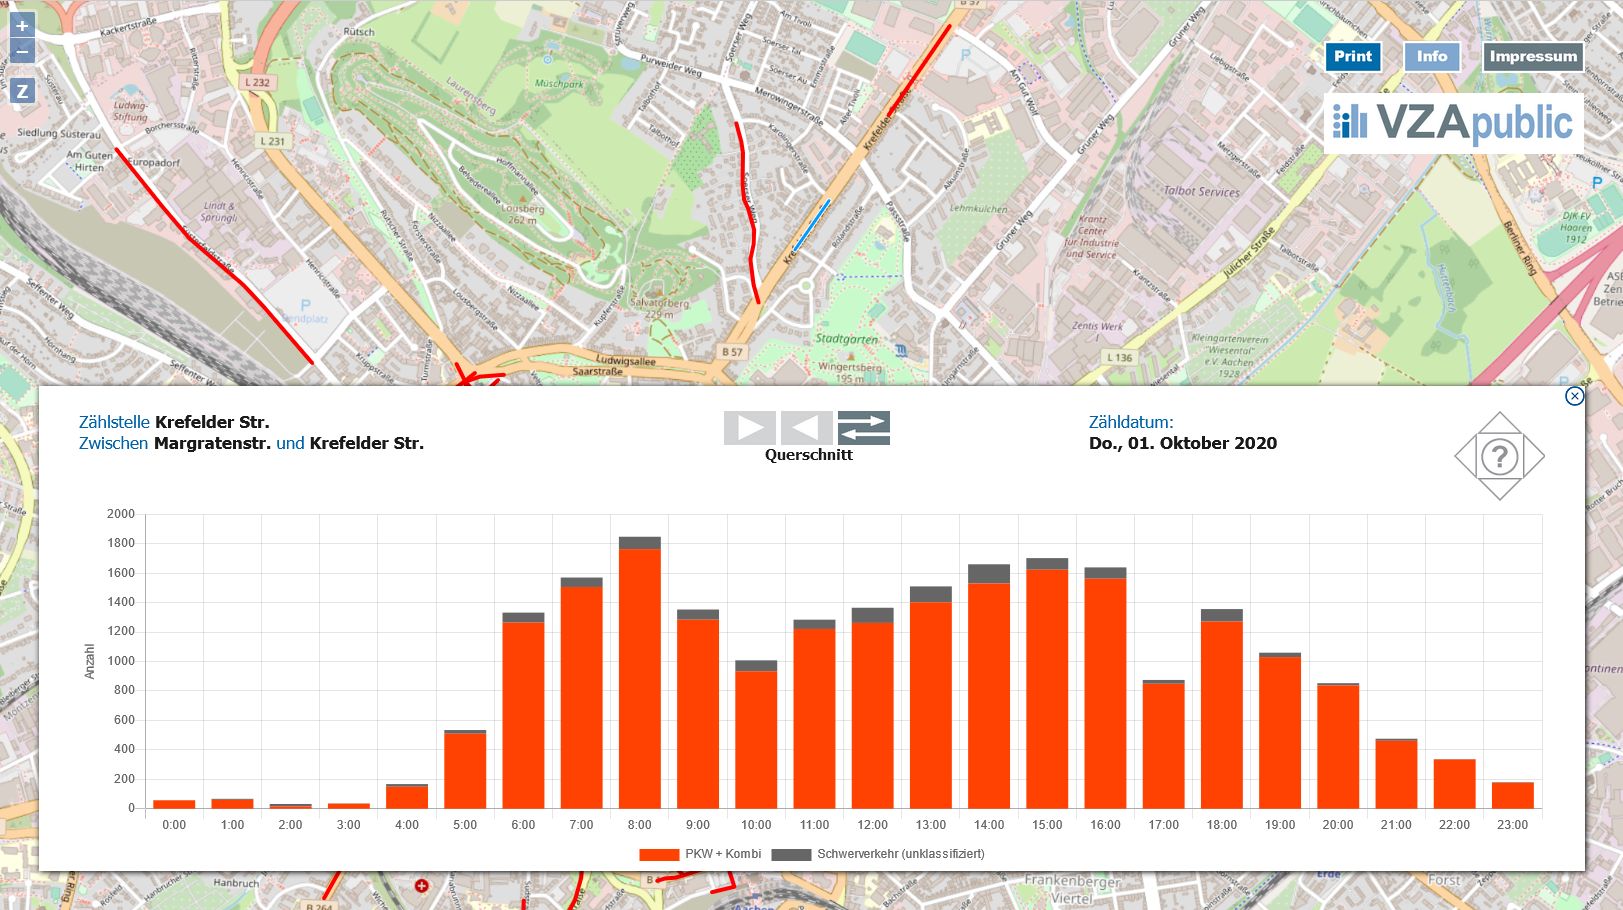 VZAweb: web-based traffic census data base